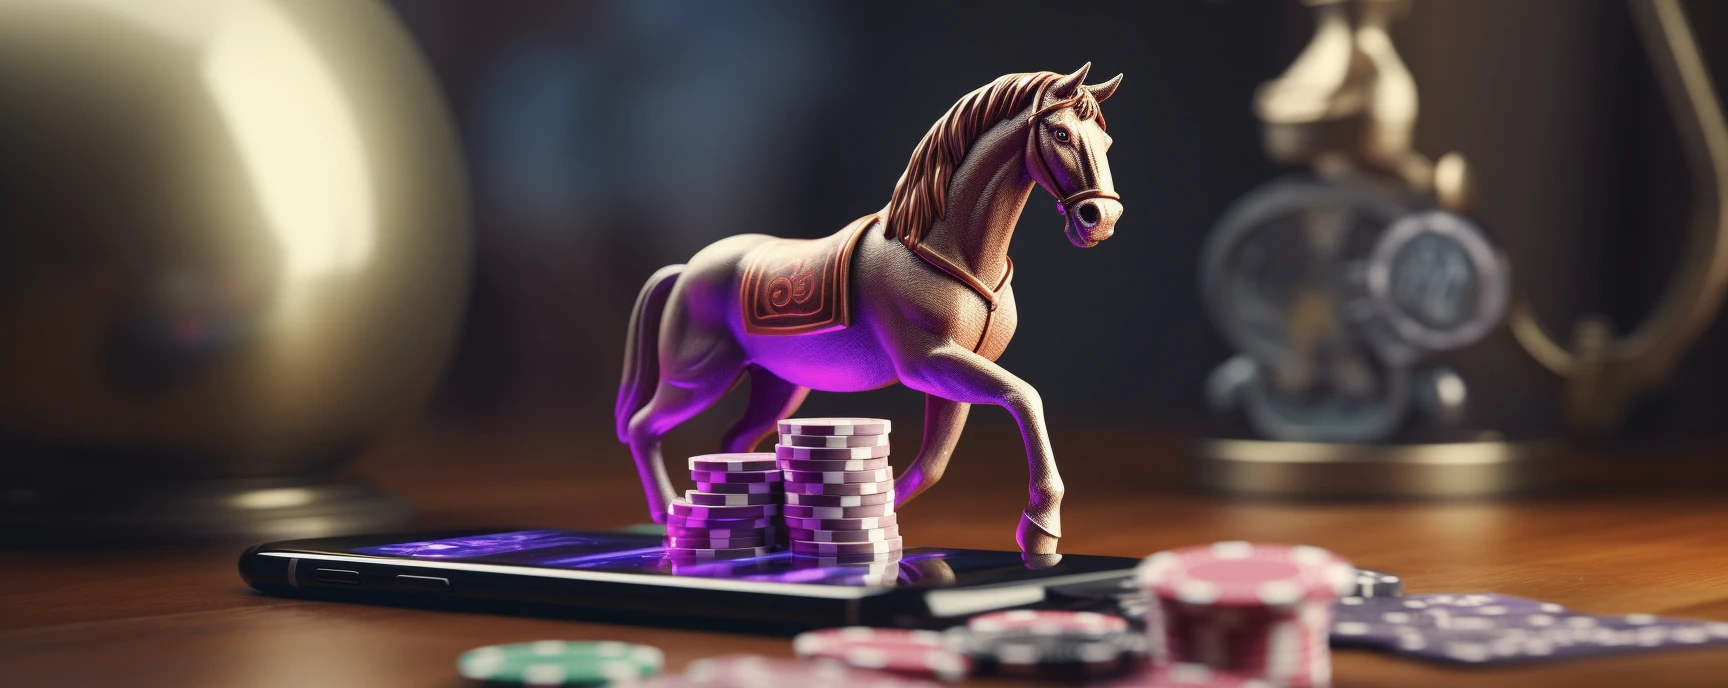 Alabama horse betting casinos